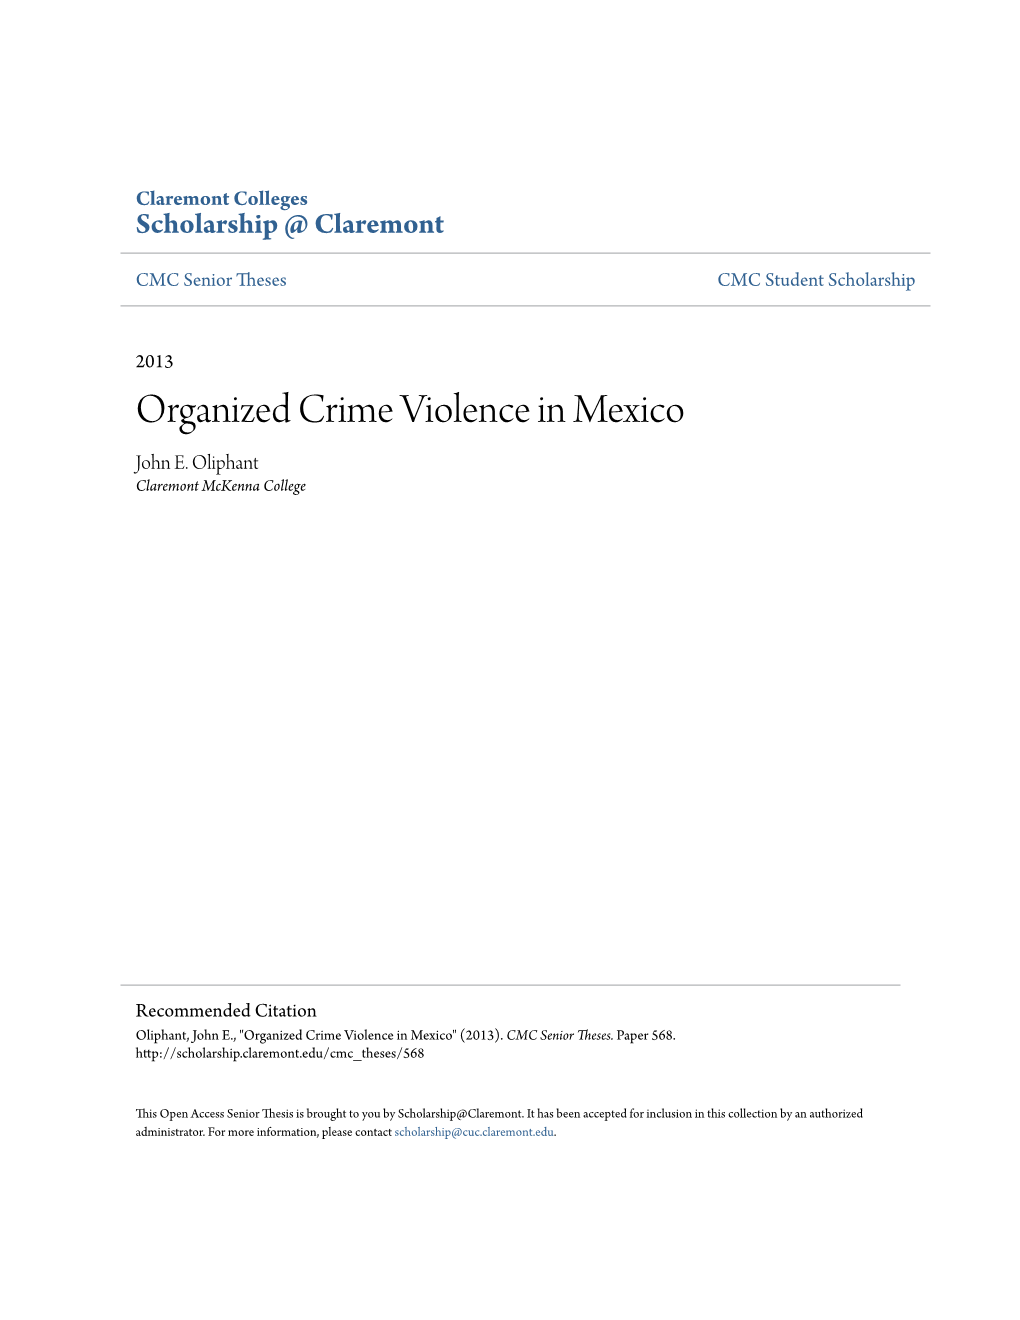 Organized Crime Violence in Mexico John E